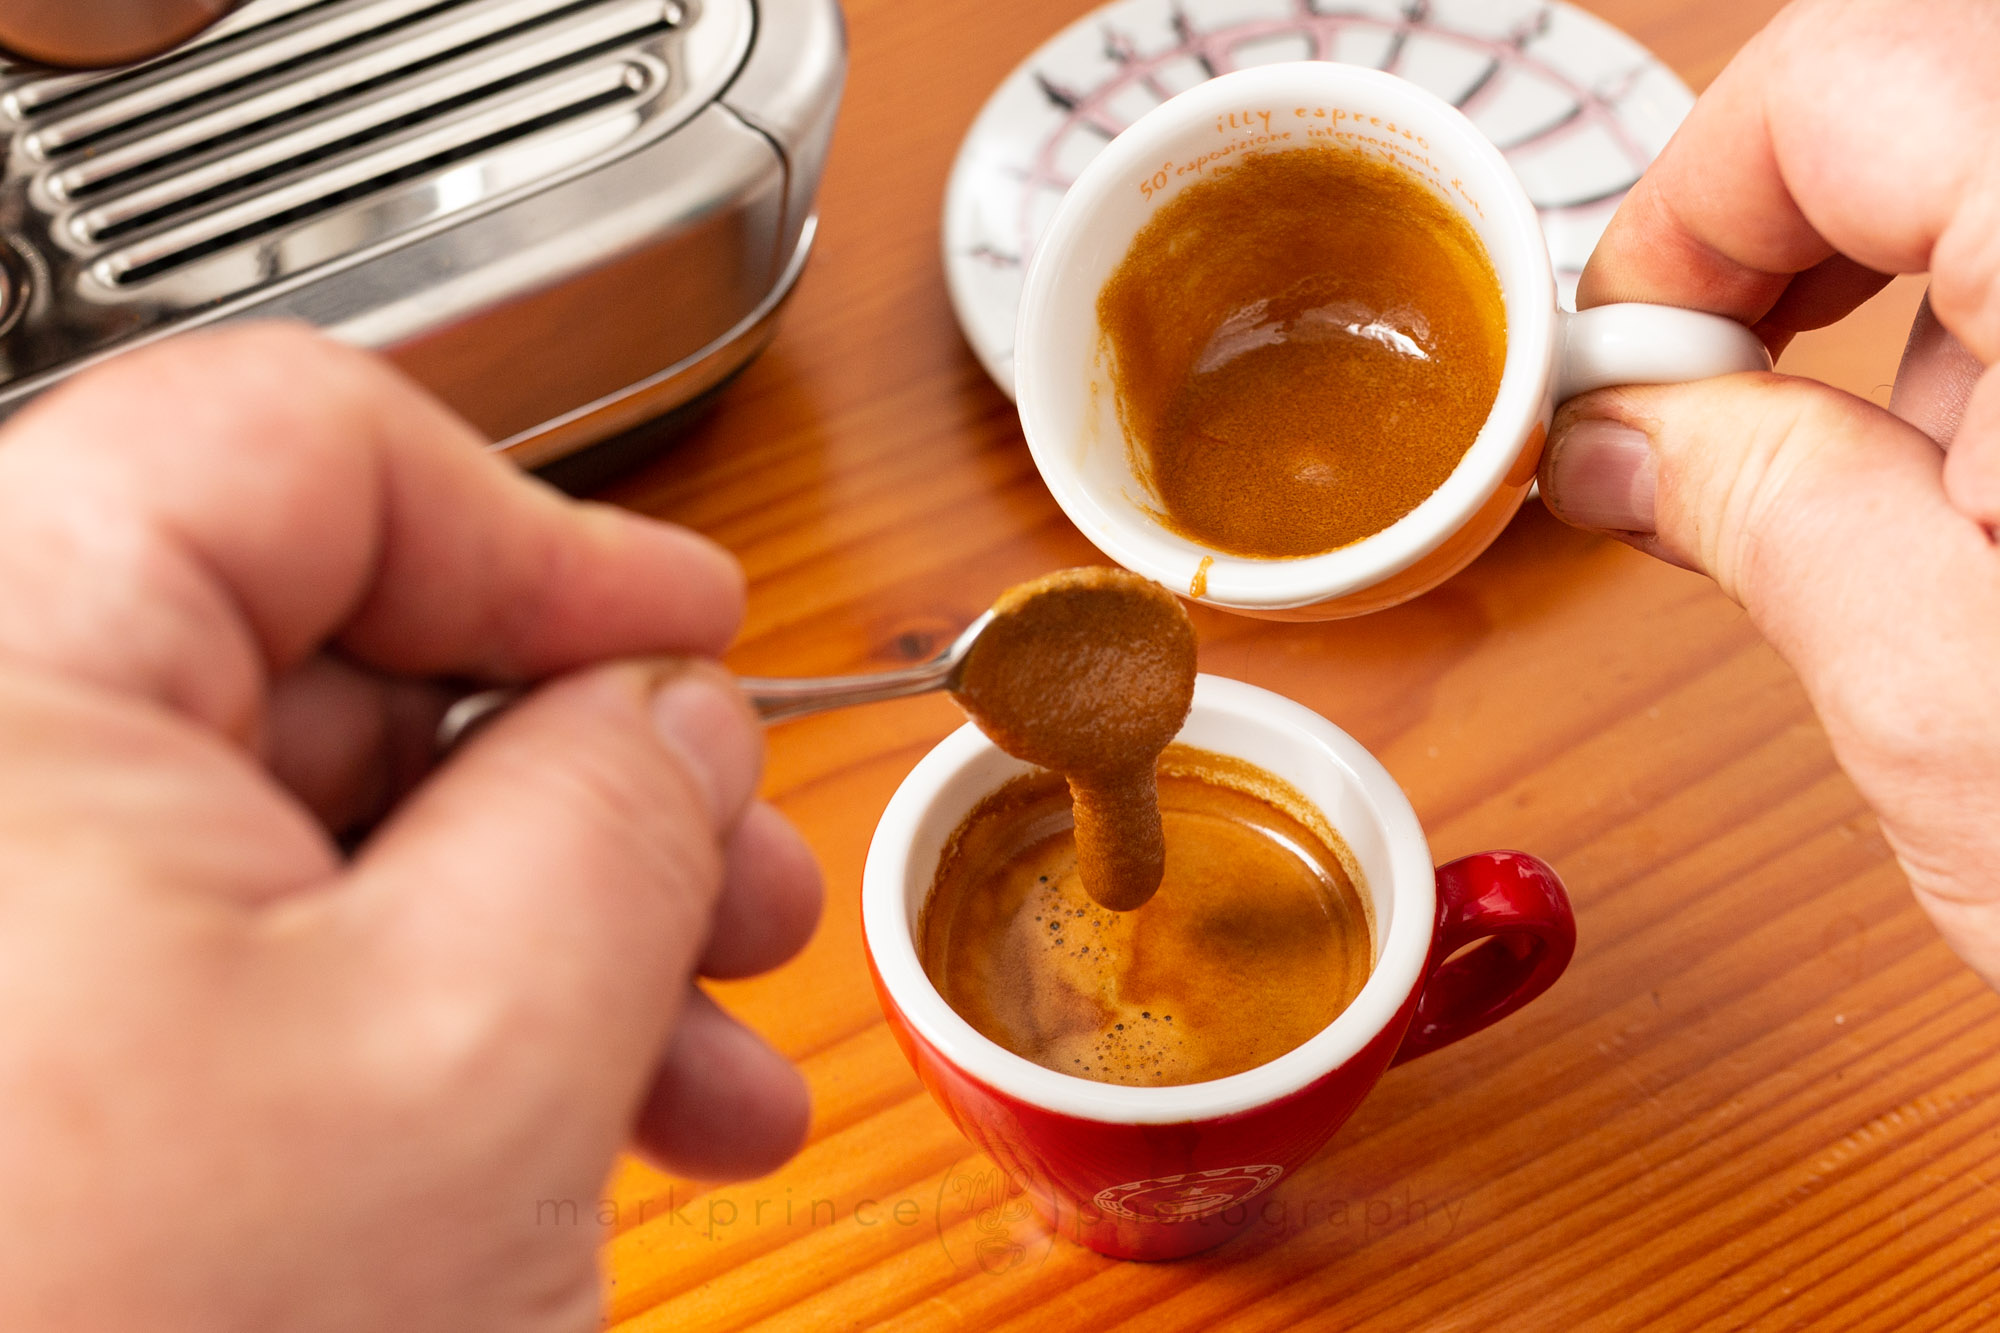 How to make CUBAN COFFEE using a Moka pot (no machine required) 